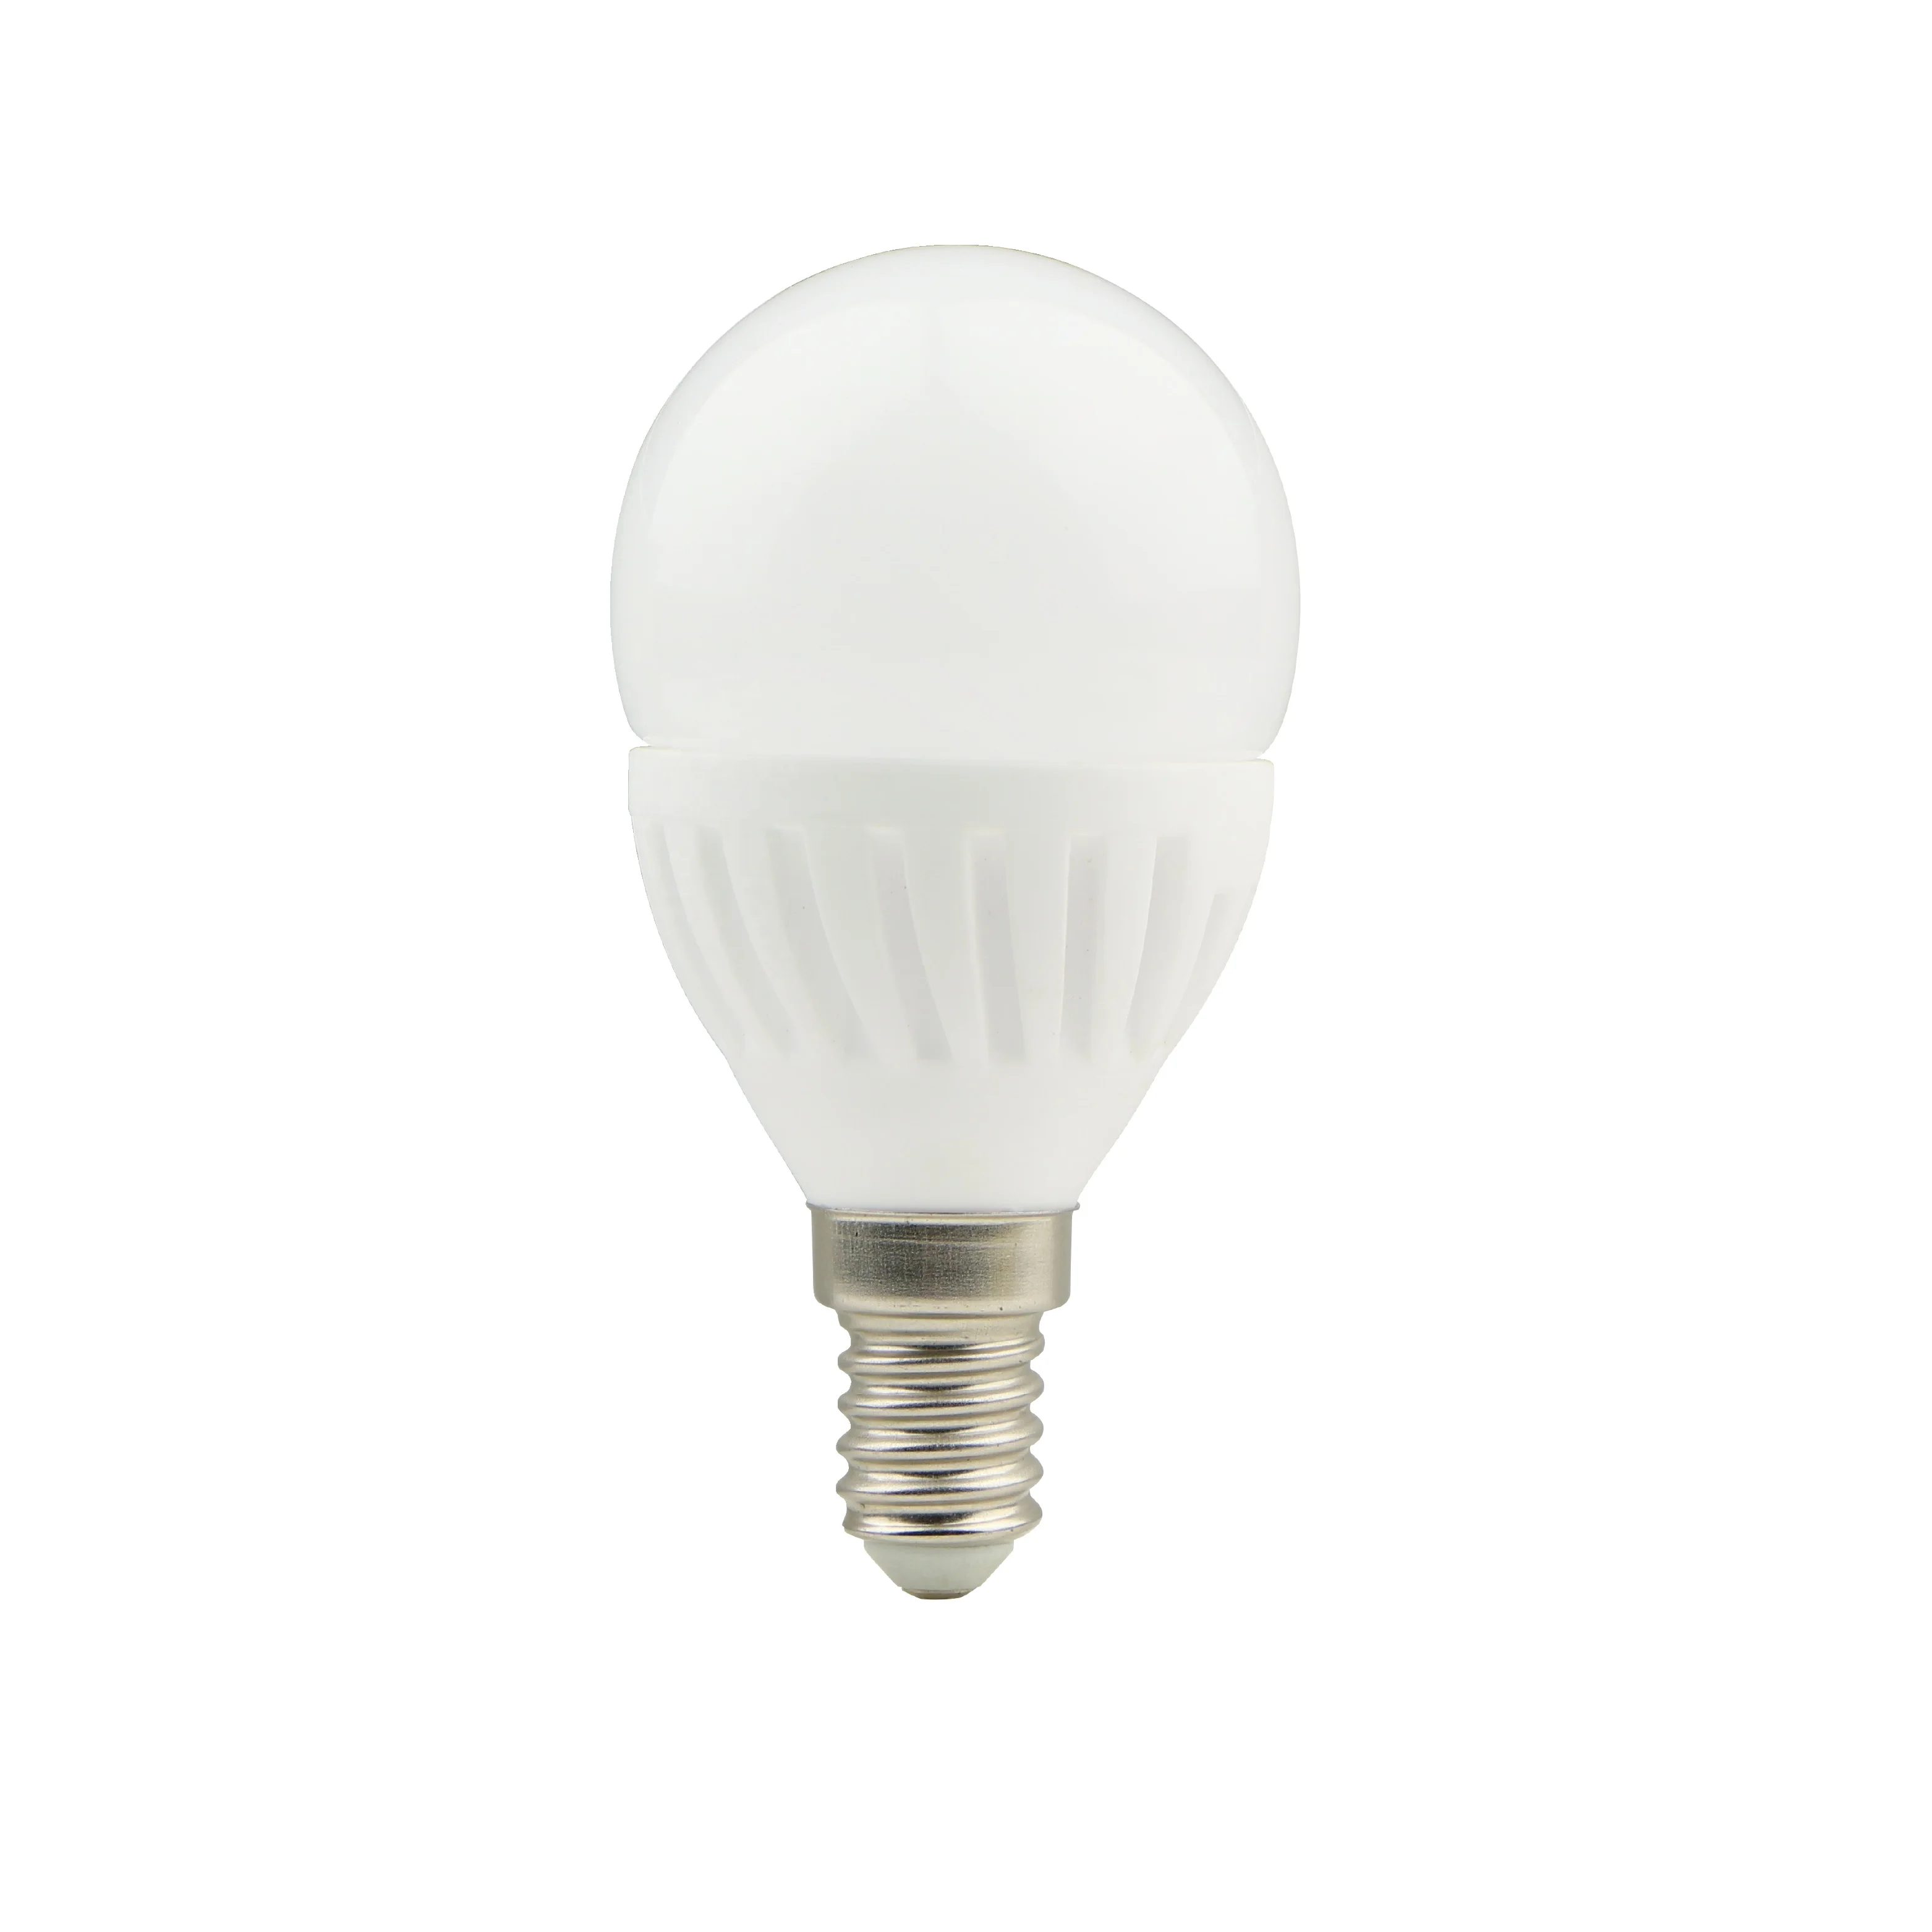 Home lights G45 E27/E14 9w 900lm ceramic spot lights led lights bulb led spotlight ra>90 ra>80